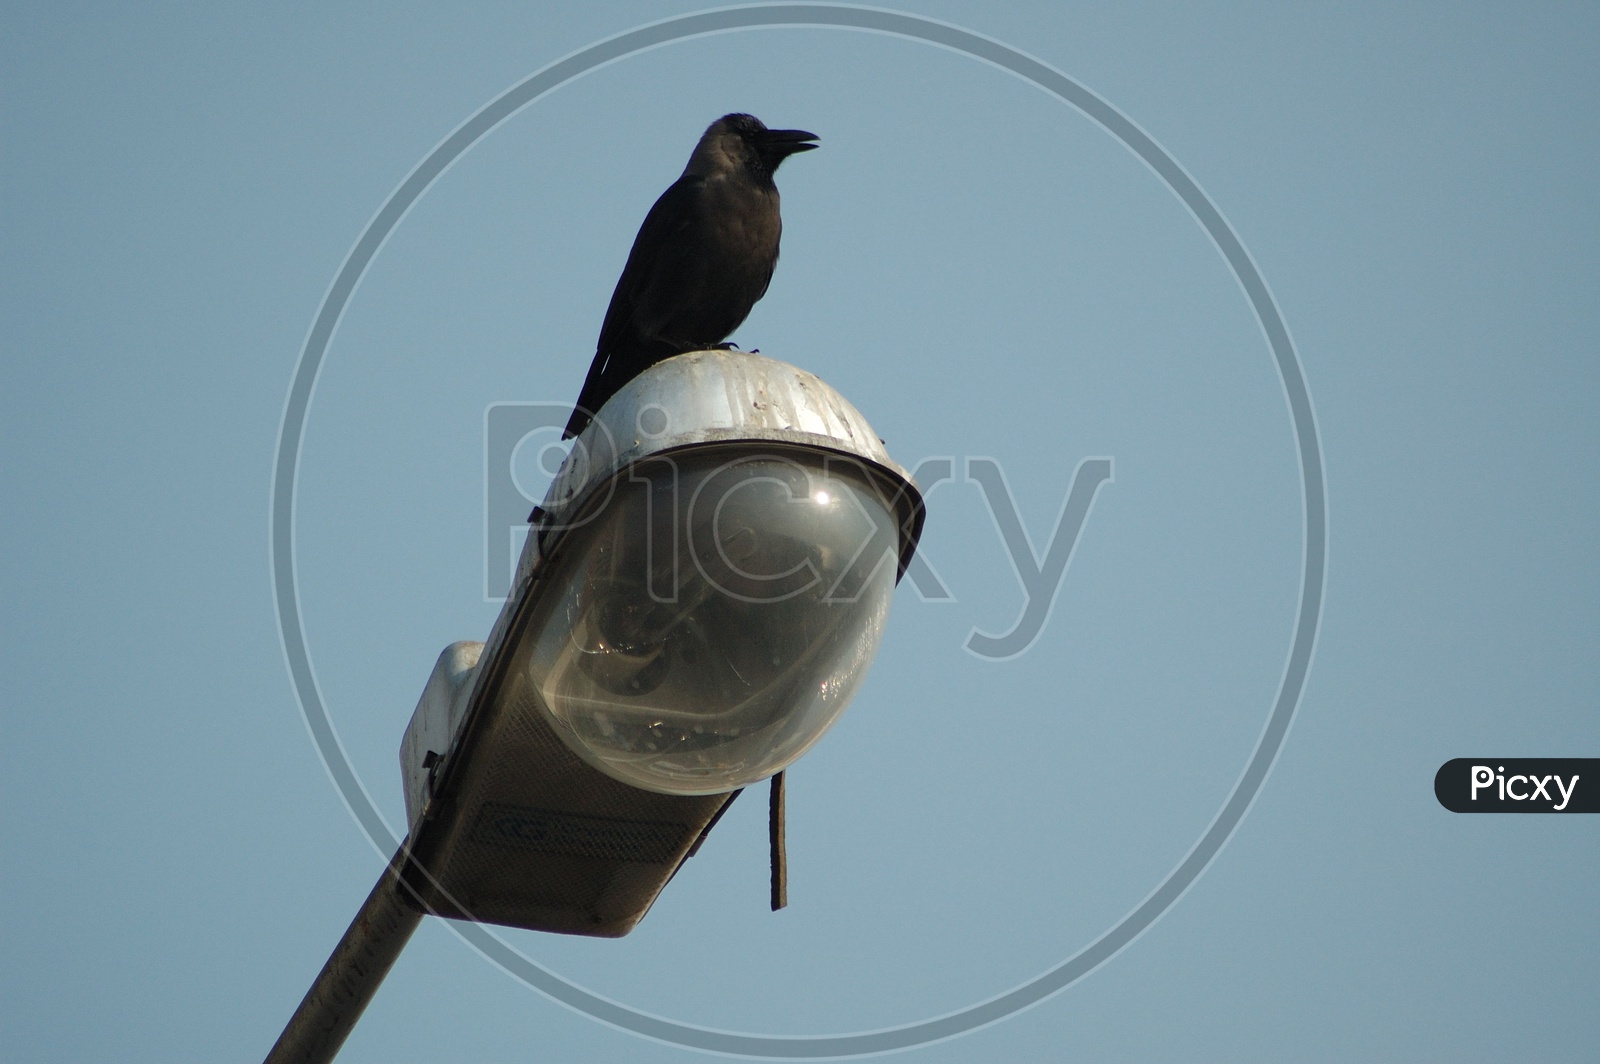 Crow on street light